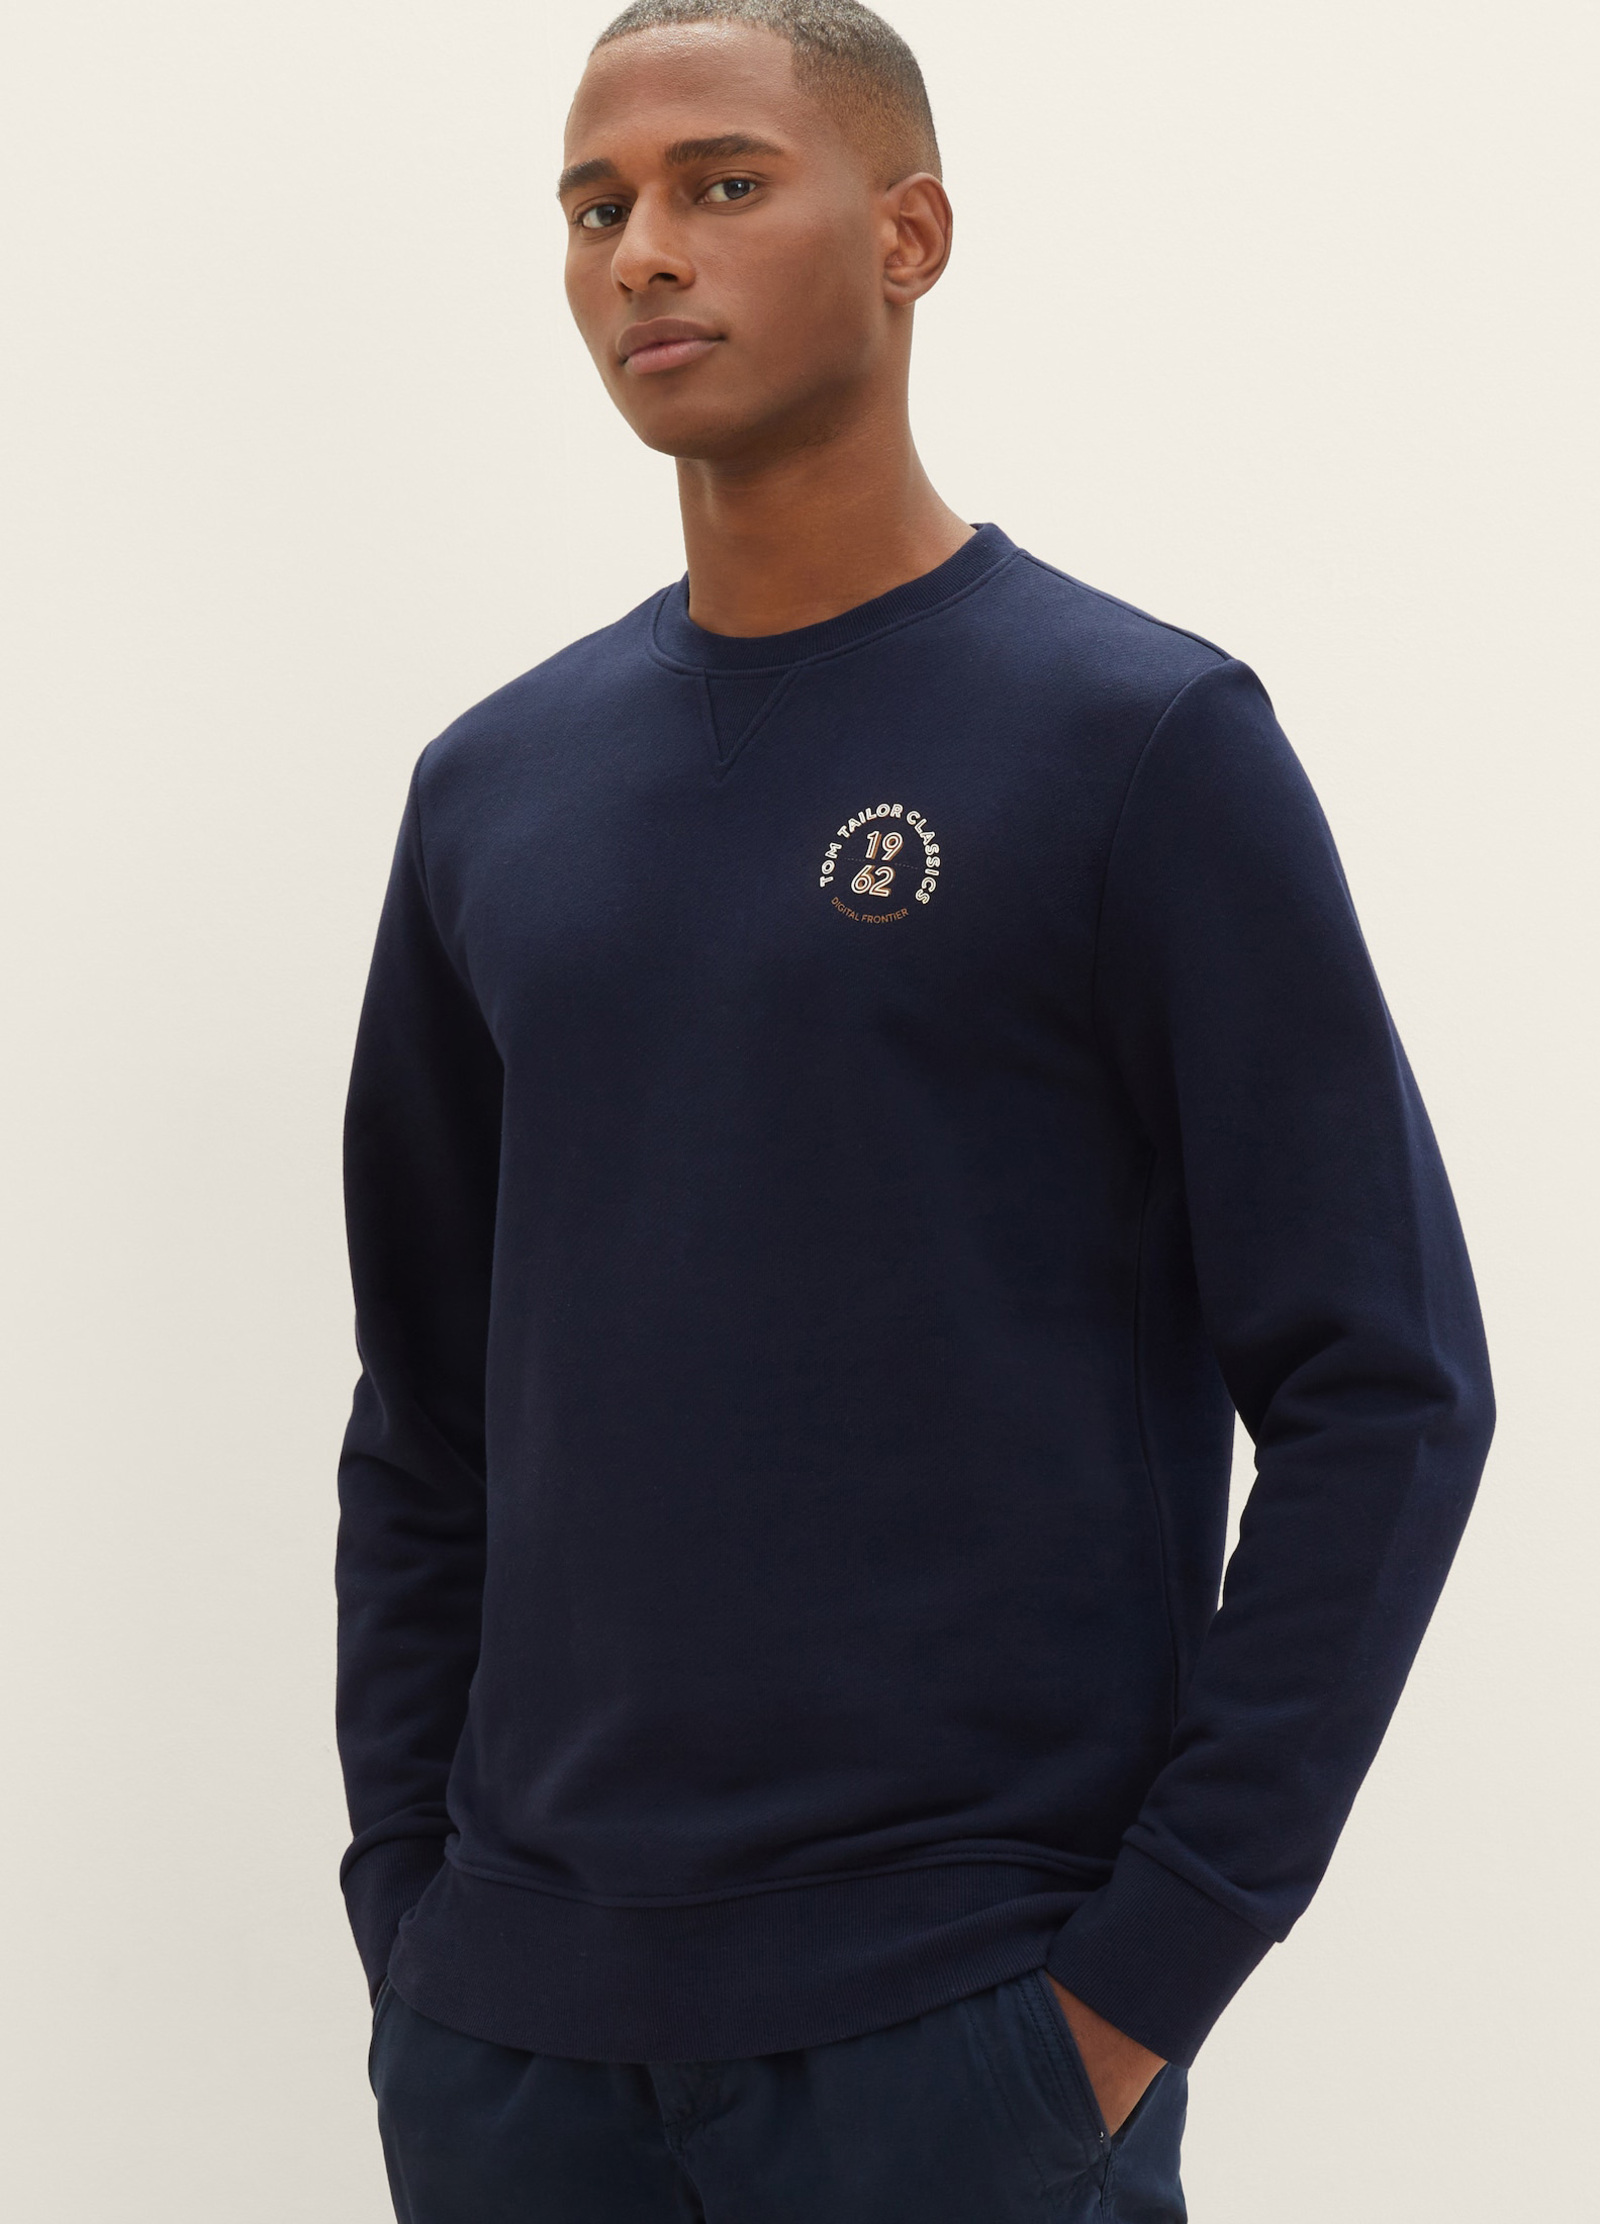 Tom Tailor® Sweatshirt With A Print - Sky Captain Blue Rozmiar L